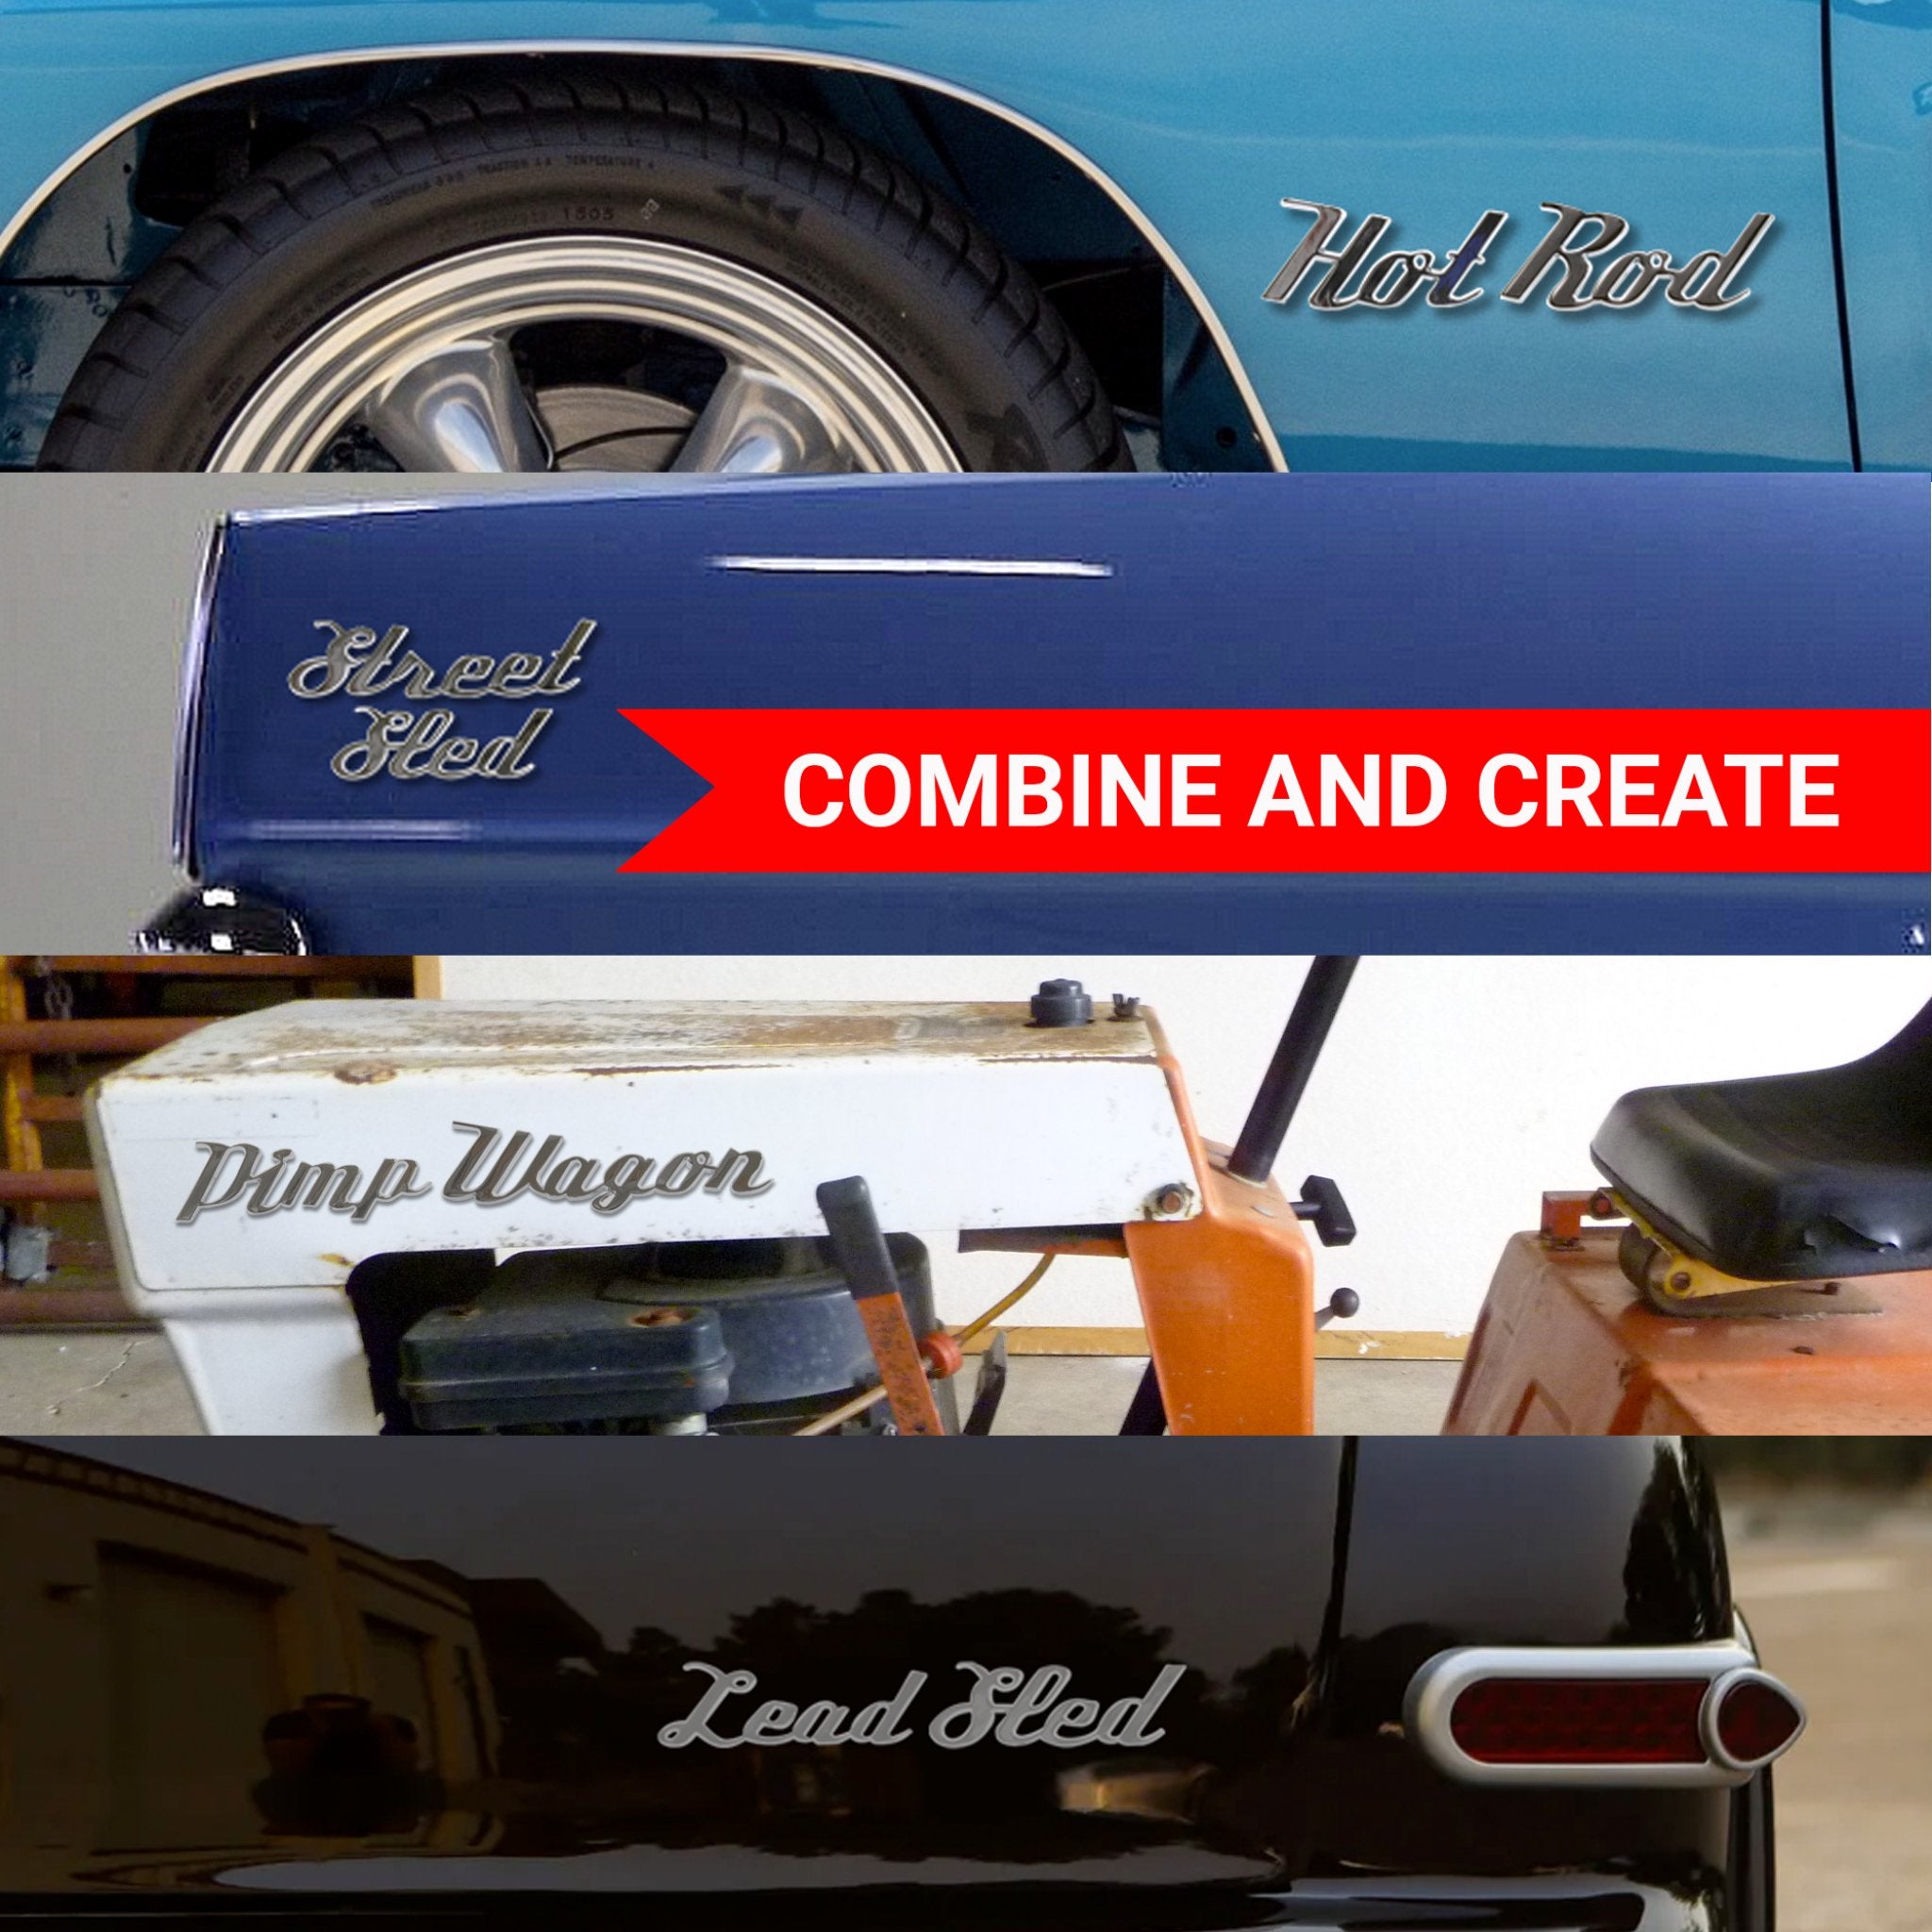 Chrome Metal "Lead" Script Letter Grille Fender Emblem Badge Car Truck Hot Rod